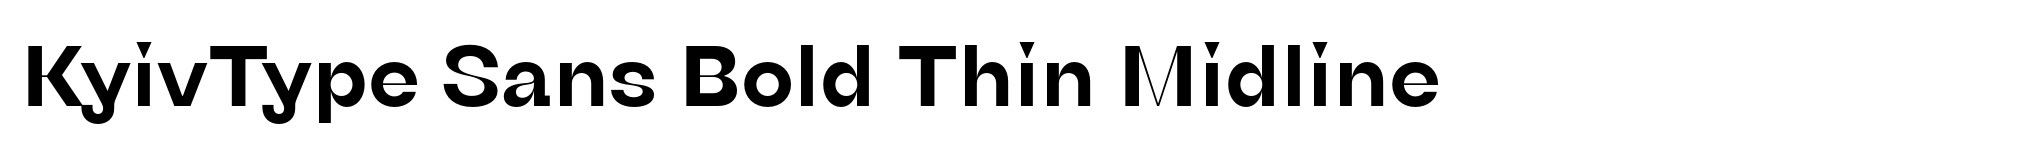 KyivType Sans Bold Thin Midline image